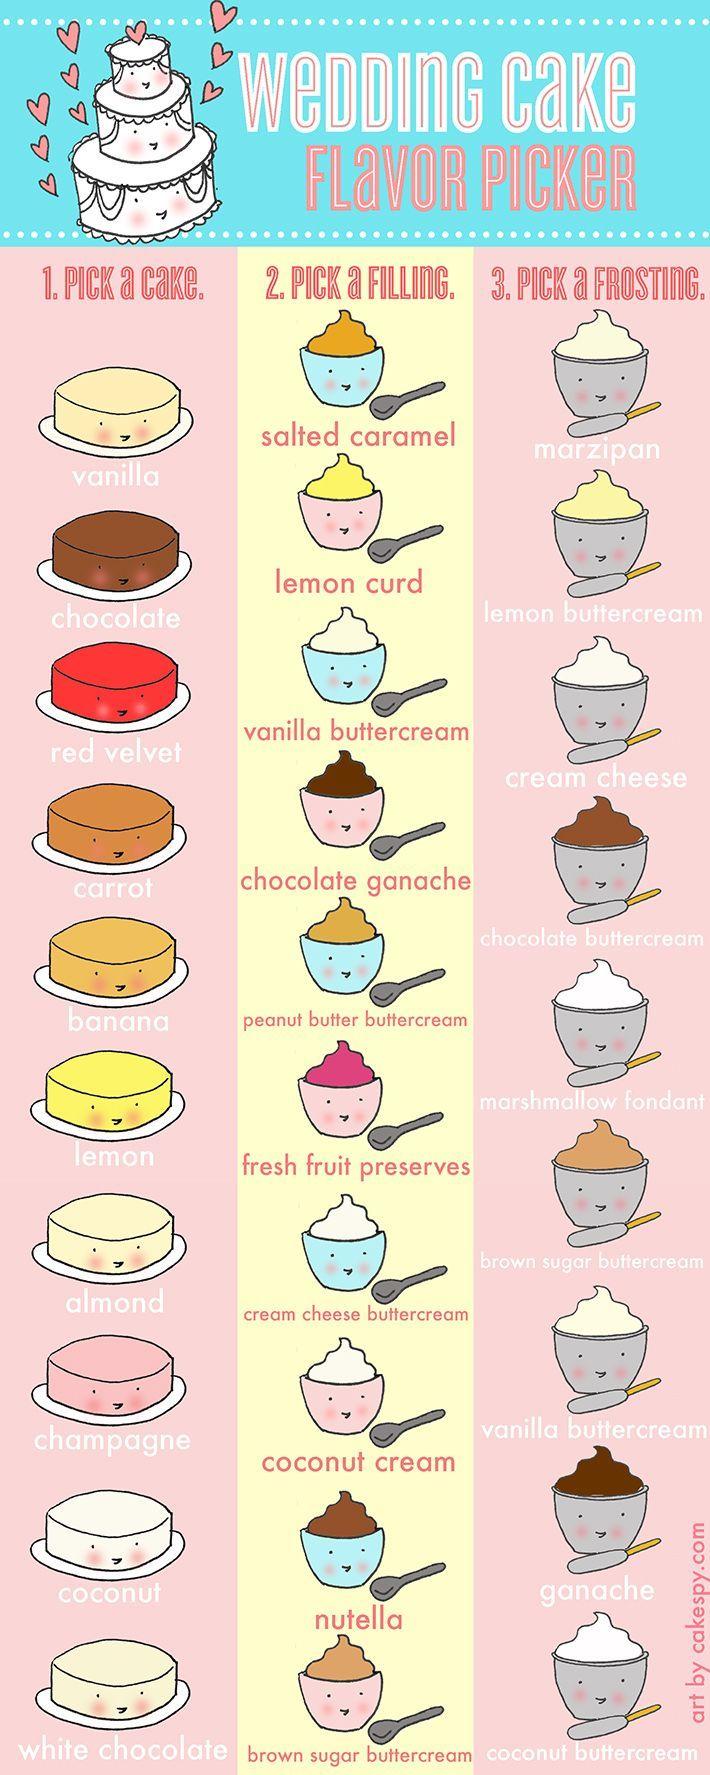 Hochzeit - A Fun Wedding Cake Flavors Infographic - On Craftsy!